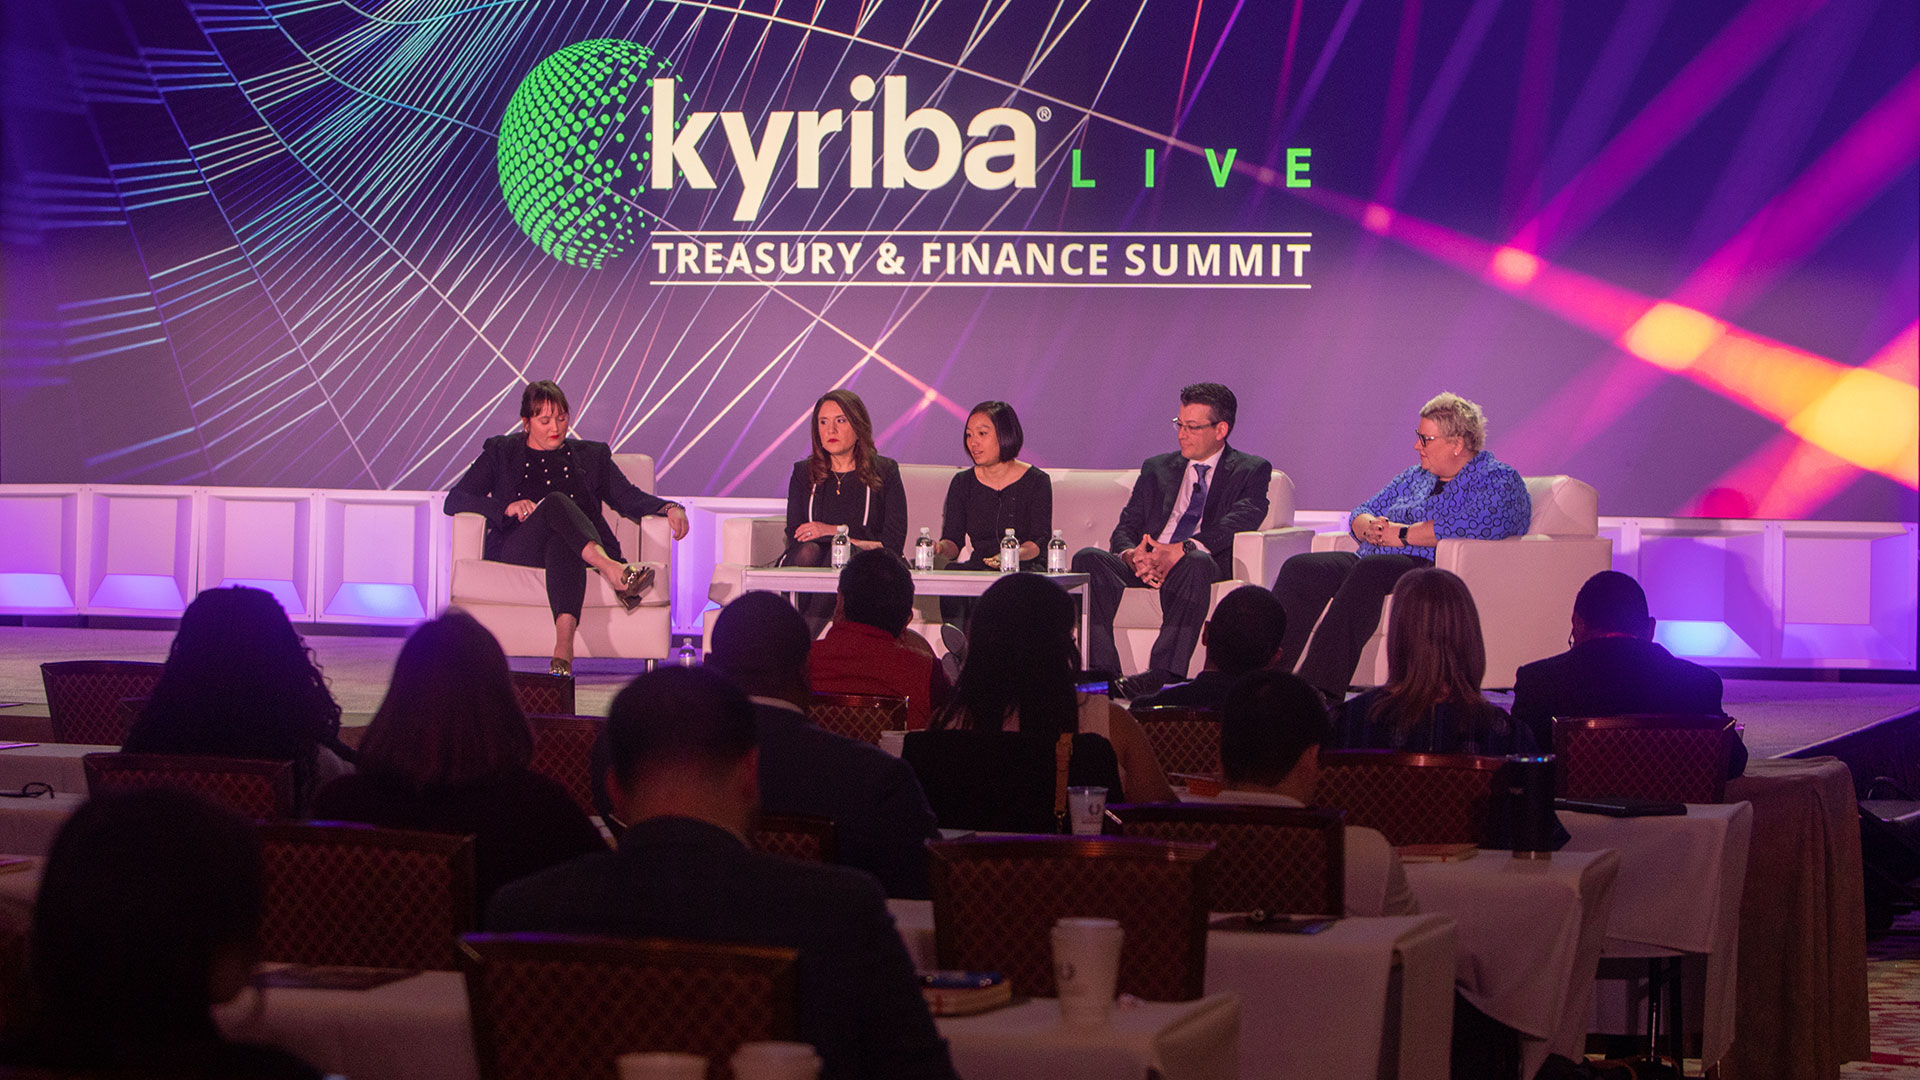 Kyriba live Driving Value Through Diversity: Women in Treasury event